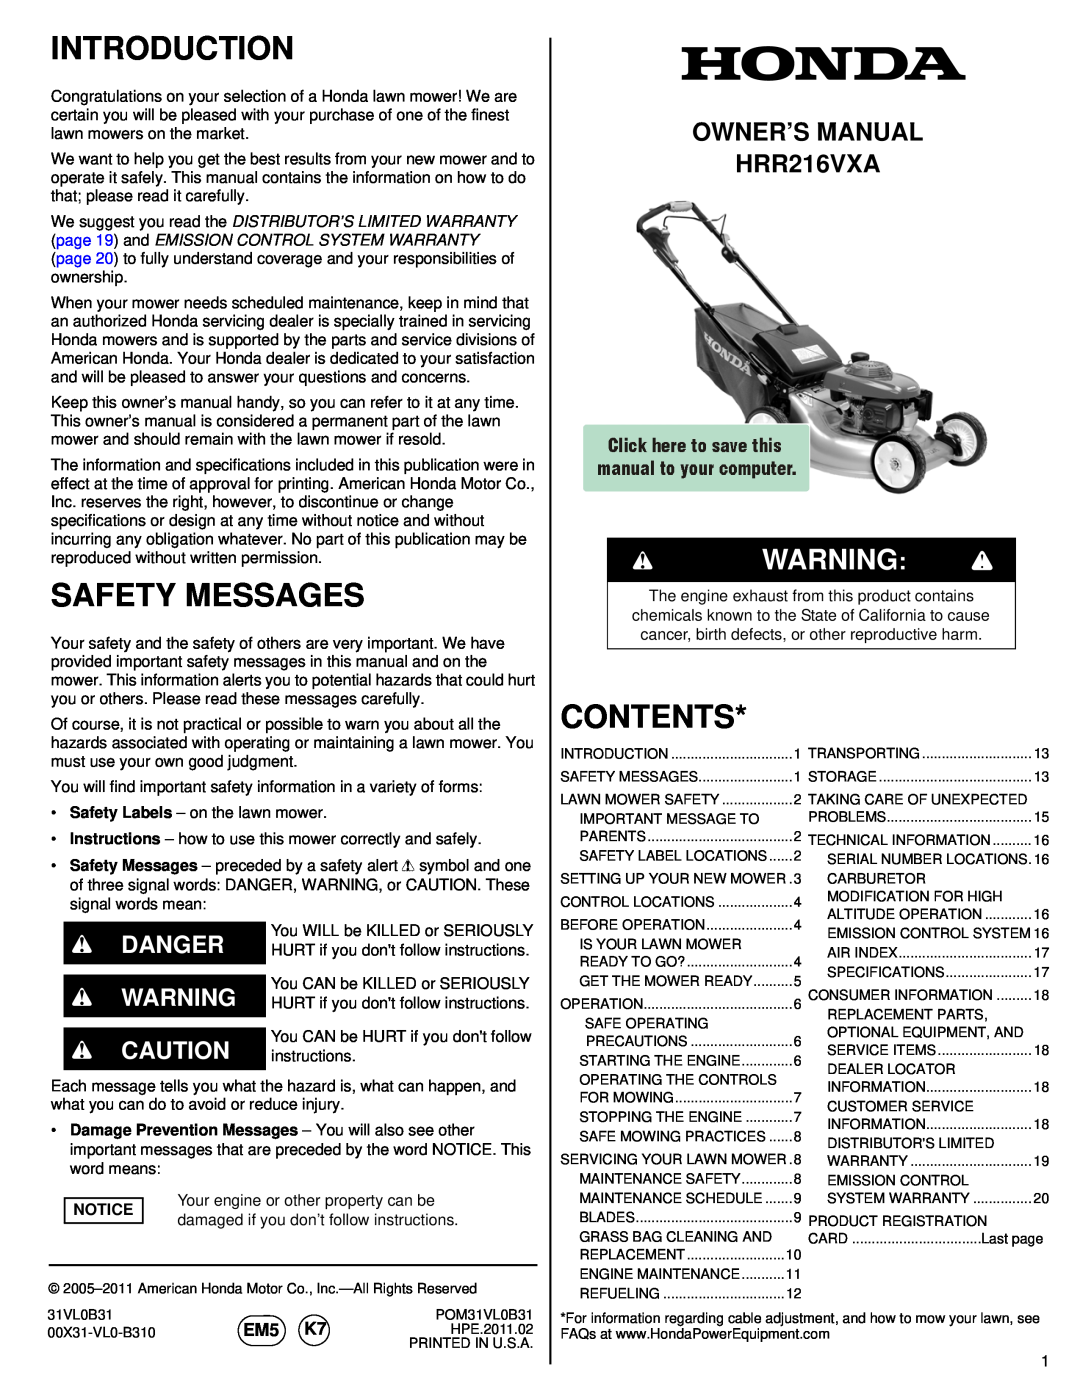 Honda Power Equipment HRR216VXA owner manual Introduction, Safety Messages, Contents, B Warning B, EM5 K7 